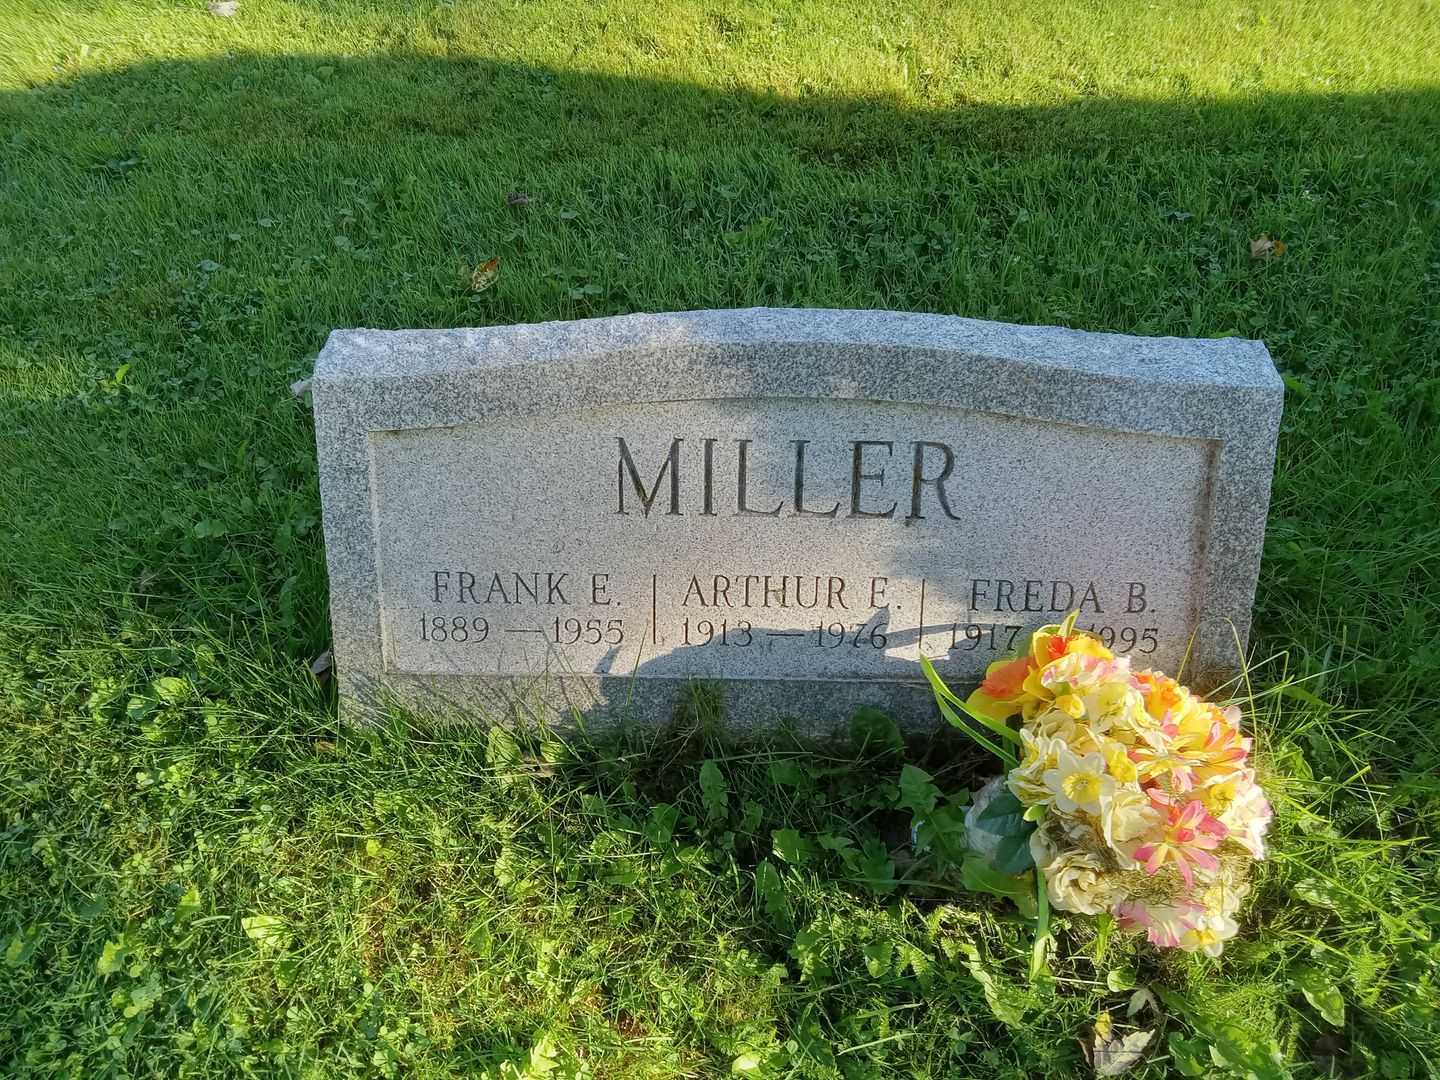 Arthur Edward Miller's grave. Photo 1